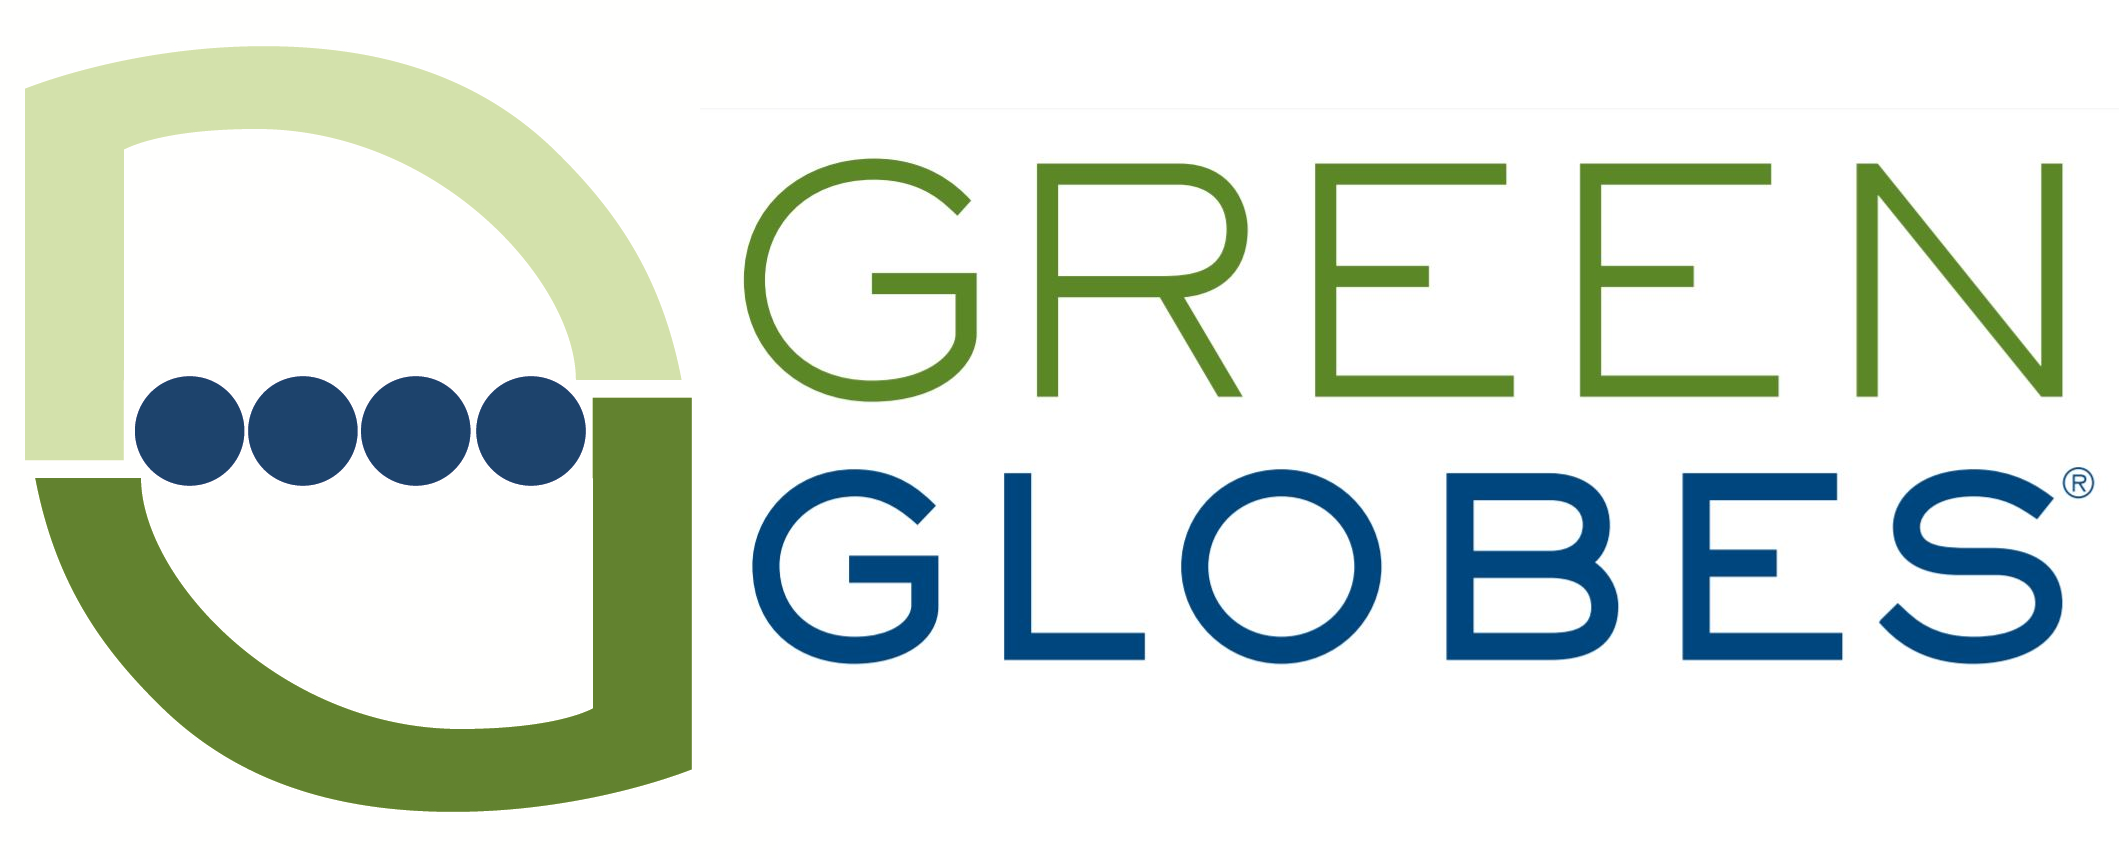 Green Globes